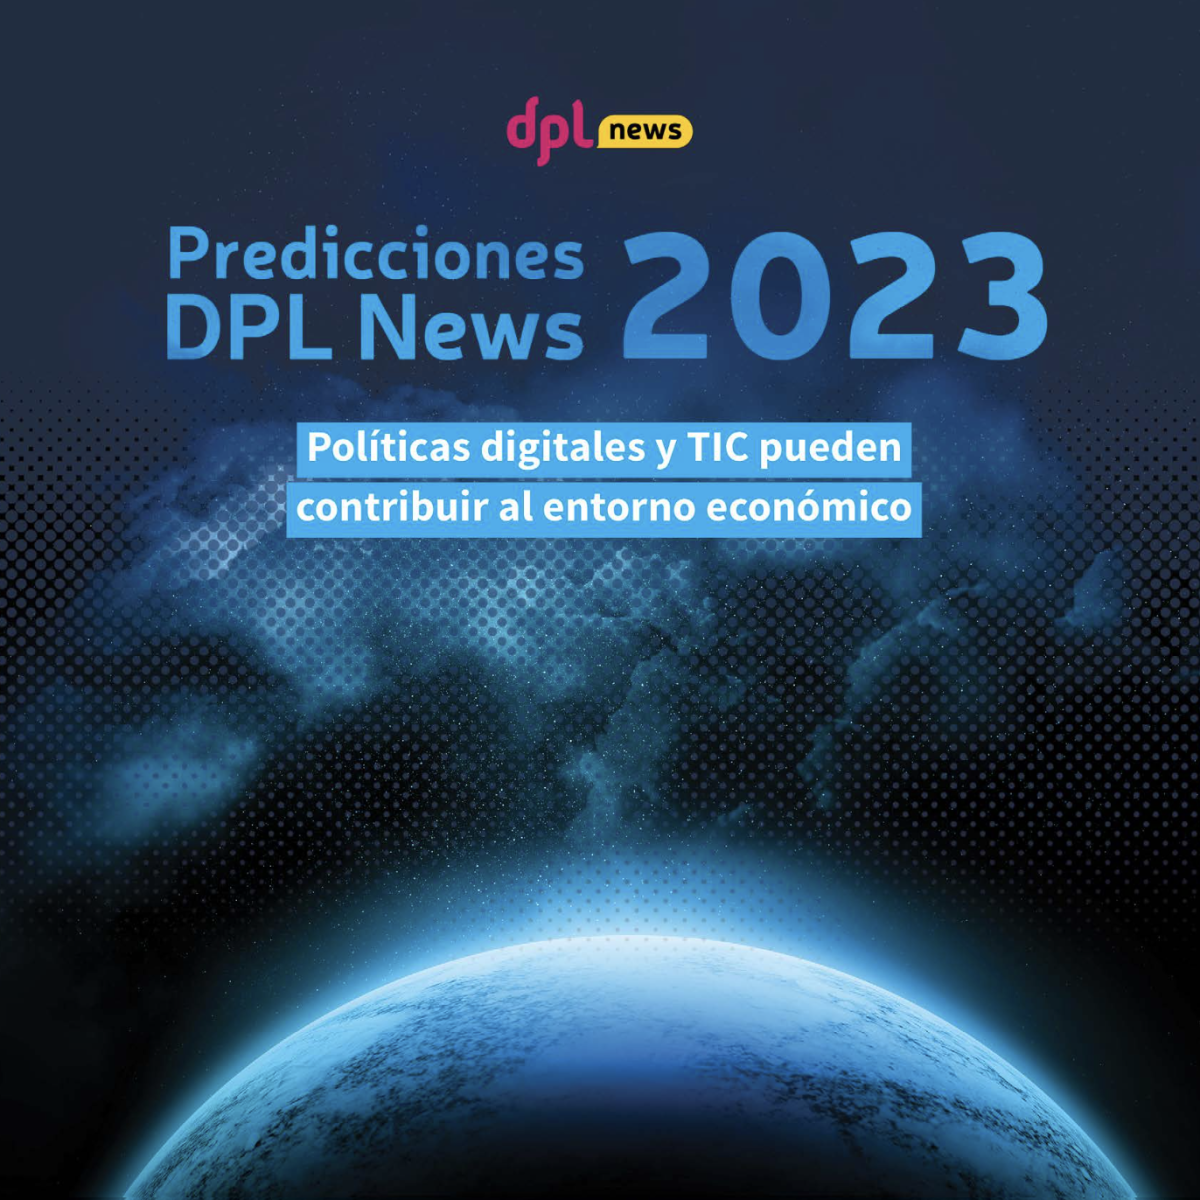 dplnews predicciones 2023 jb261222